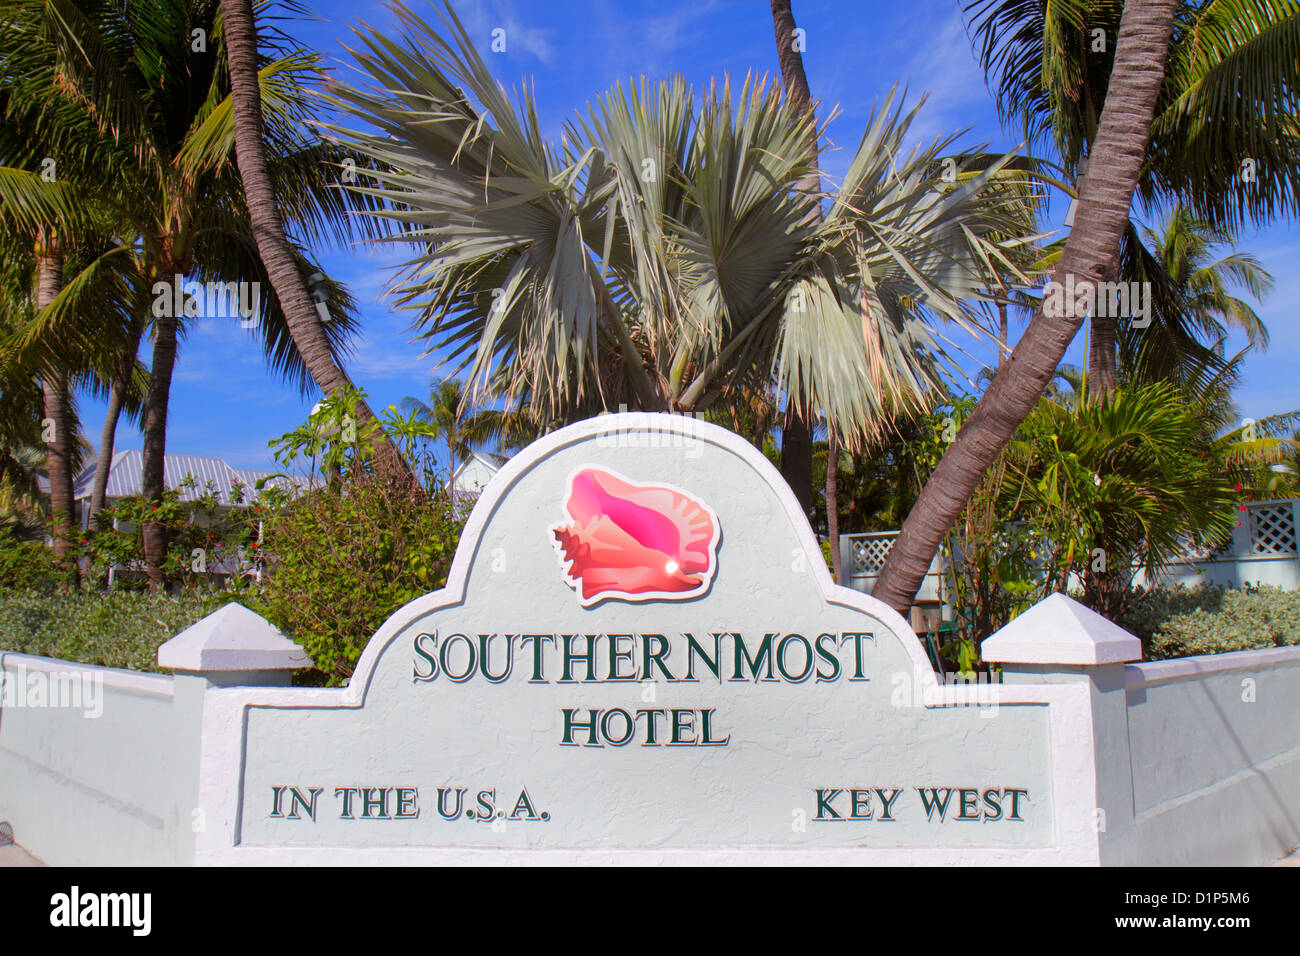 Florida Key West Florida,Keys Duval Street,Southernmost Hotel in the USA,sign,logo,visitors travel traveling tour tourist tourism landmark landmarks c Stock Photo